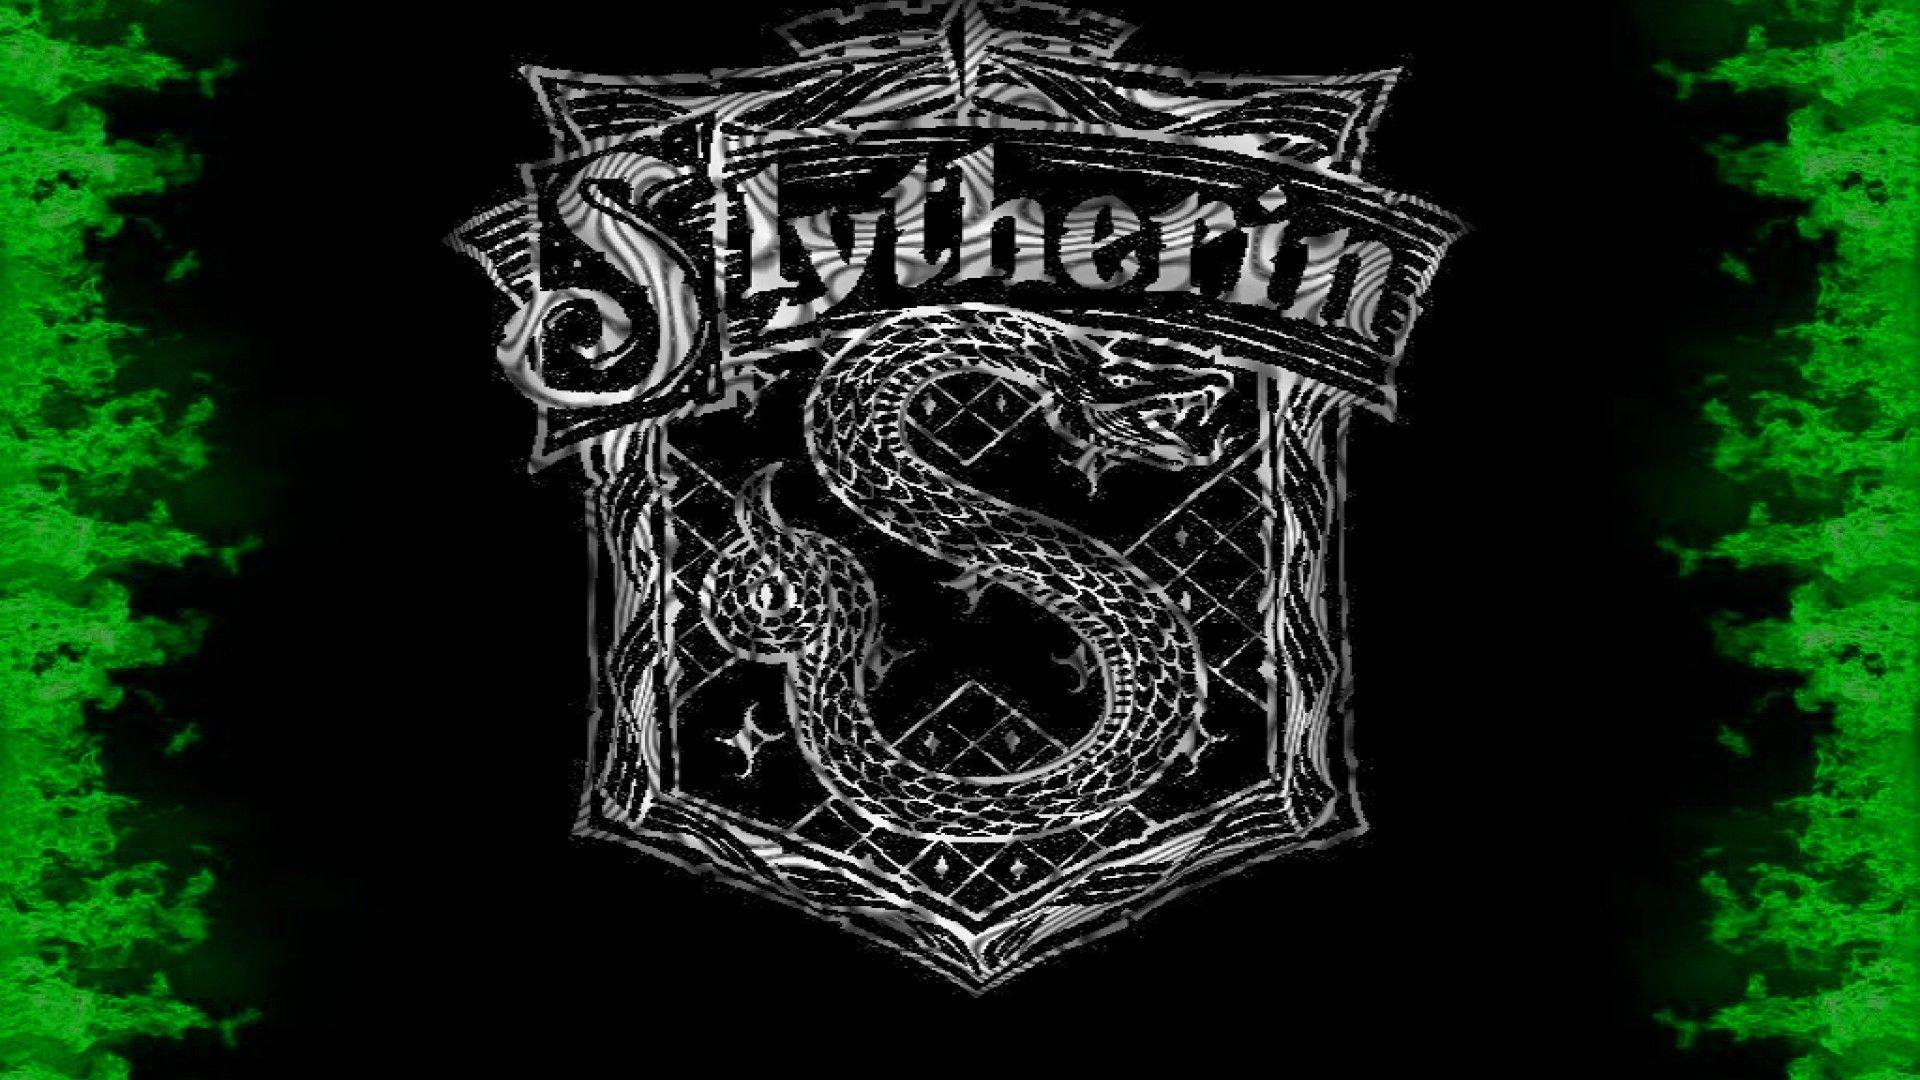 Hình nền 1920x1080 Slytherin.  Hình nền Slytherin, Hình nền Slytherin Hình nền Ultraman và Rắn Slytherin